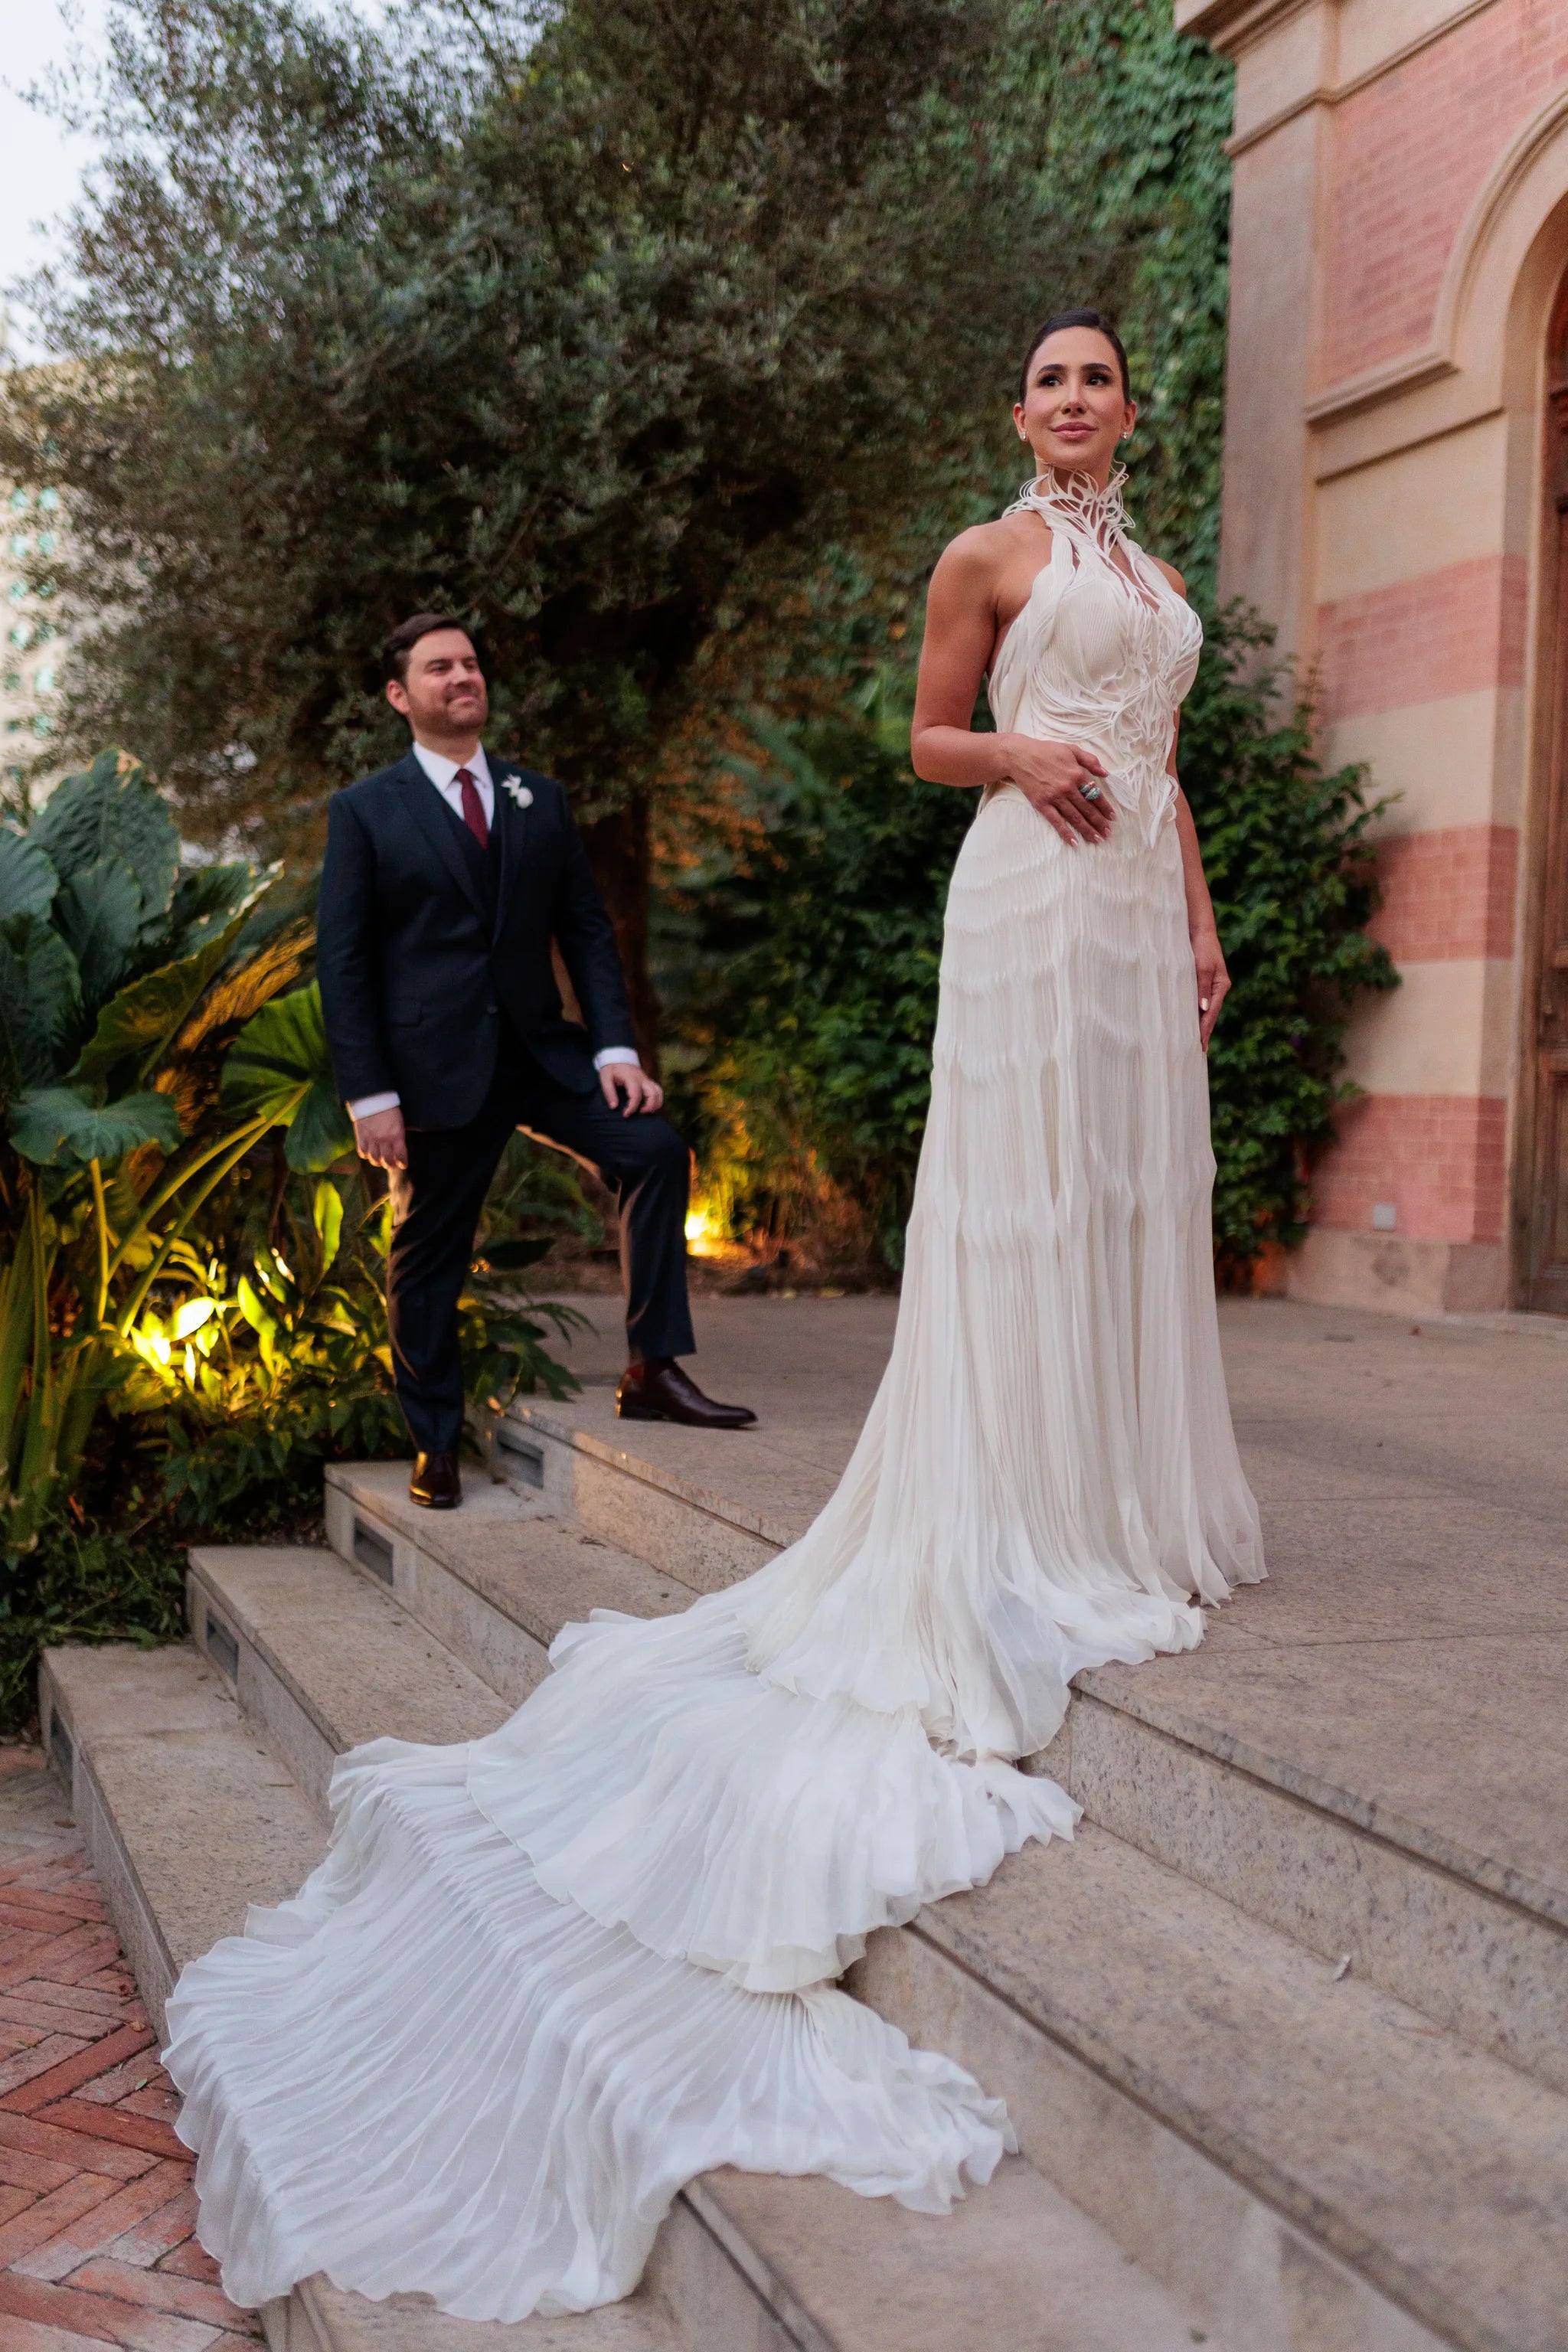 Roberto Toscano and Mariana Pavani on their wedding day. COURTESY OF EUKA WEDDINGS